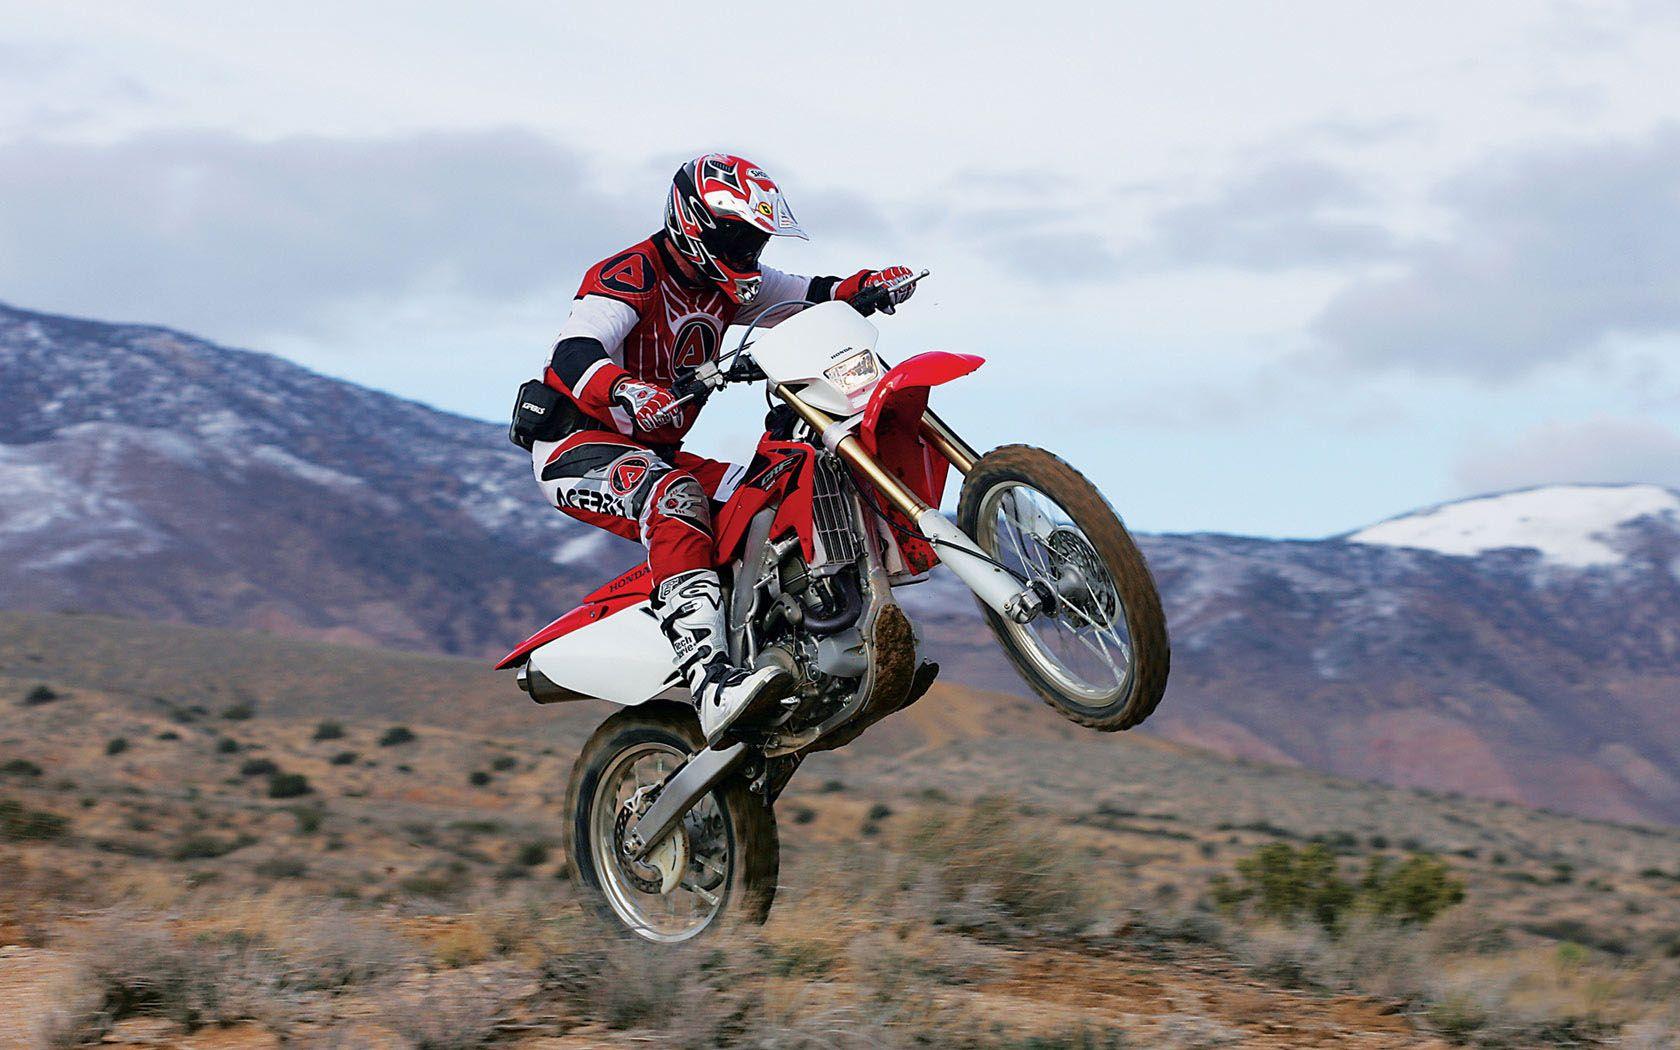 Honda CRF 450 Motocross Bike in Action < Motorcycles < Vehicles